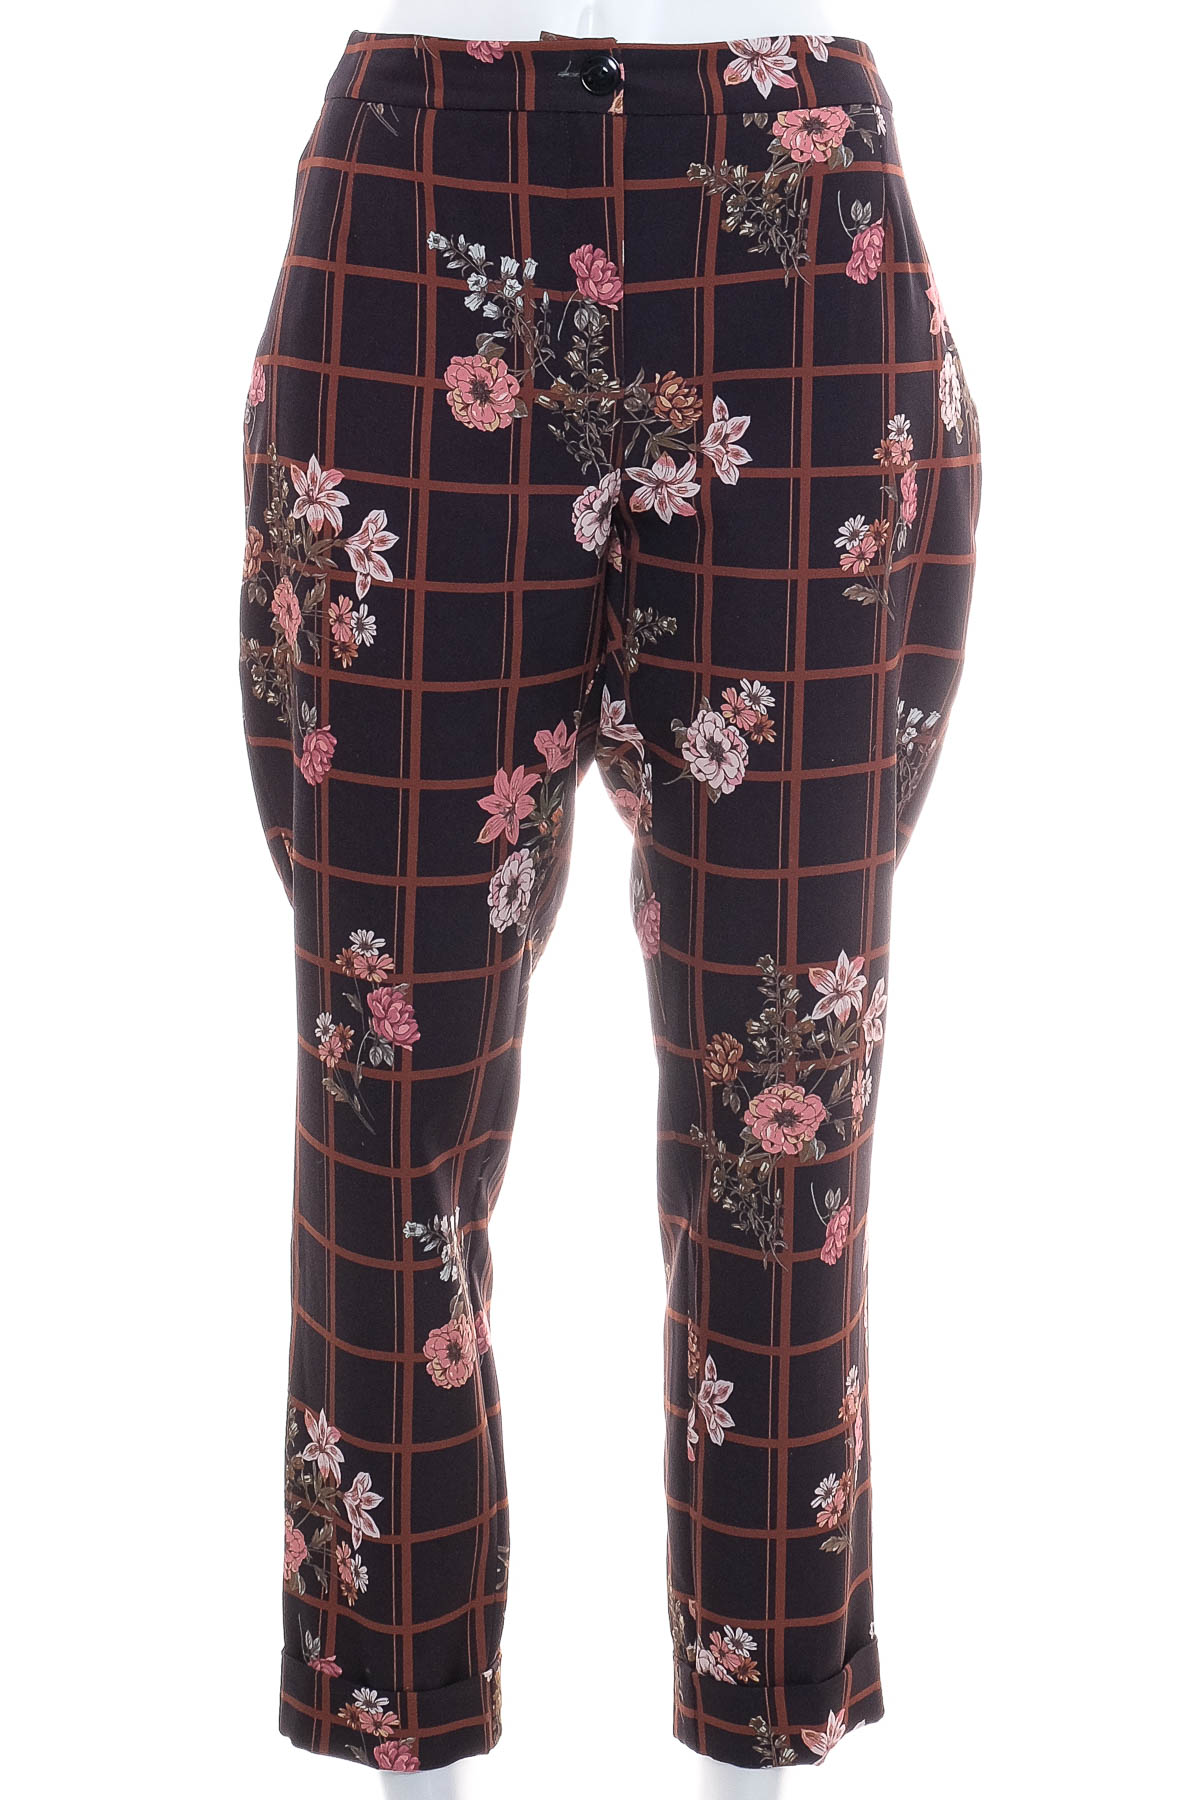 Women's trousers - ATMOS fashion - 0